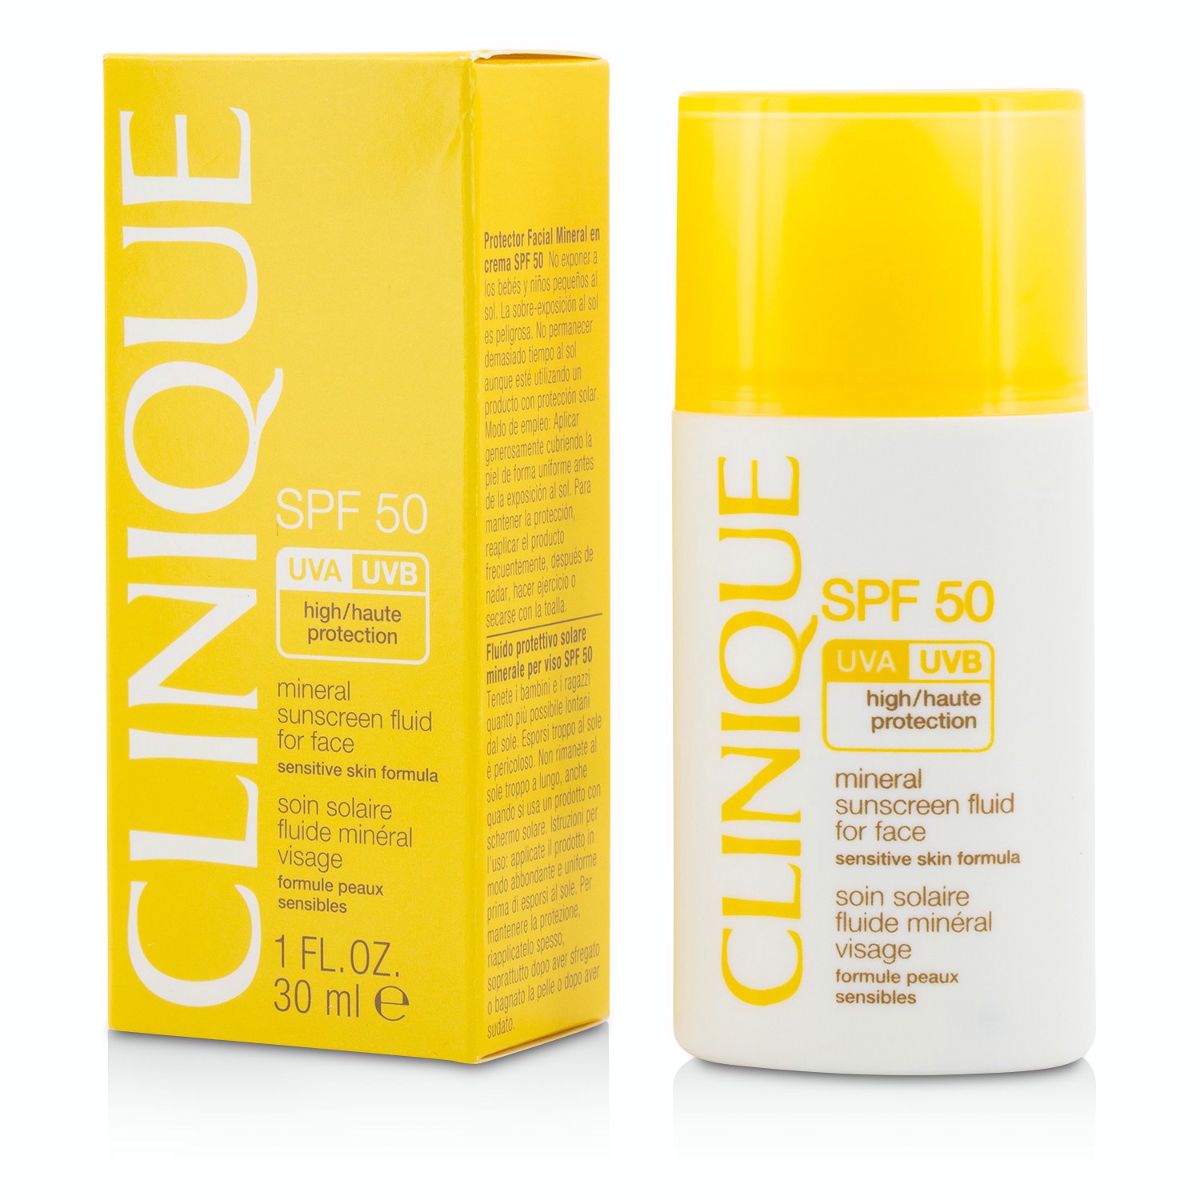 Mineral Sunscreen Fluid For Face SPF 50 - Sensitive Skin Formula Clinique Image